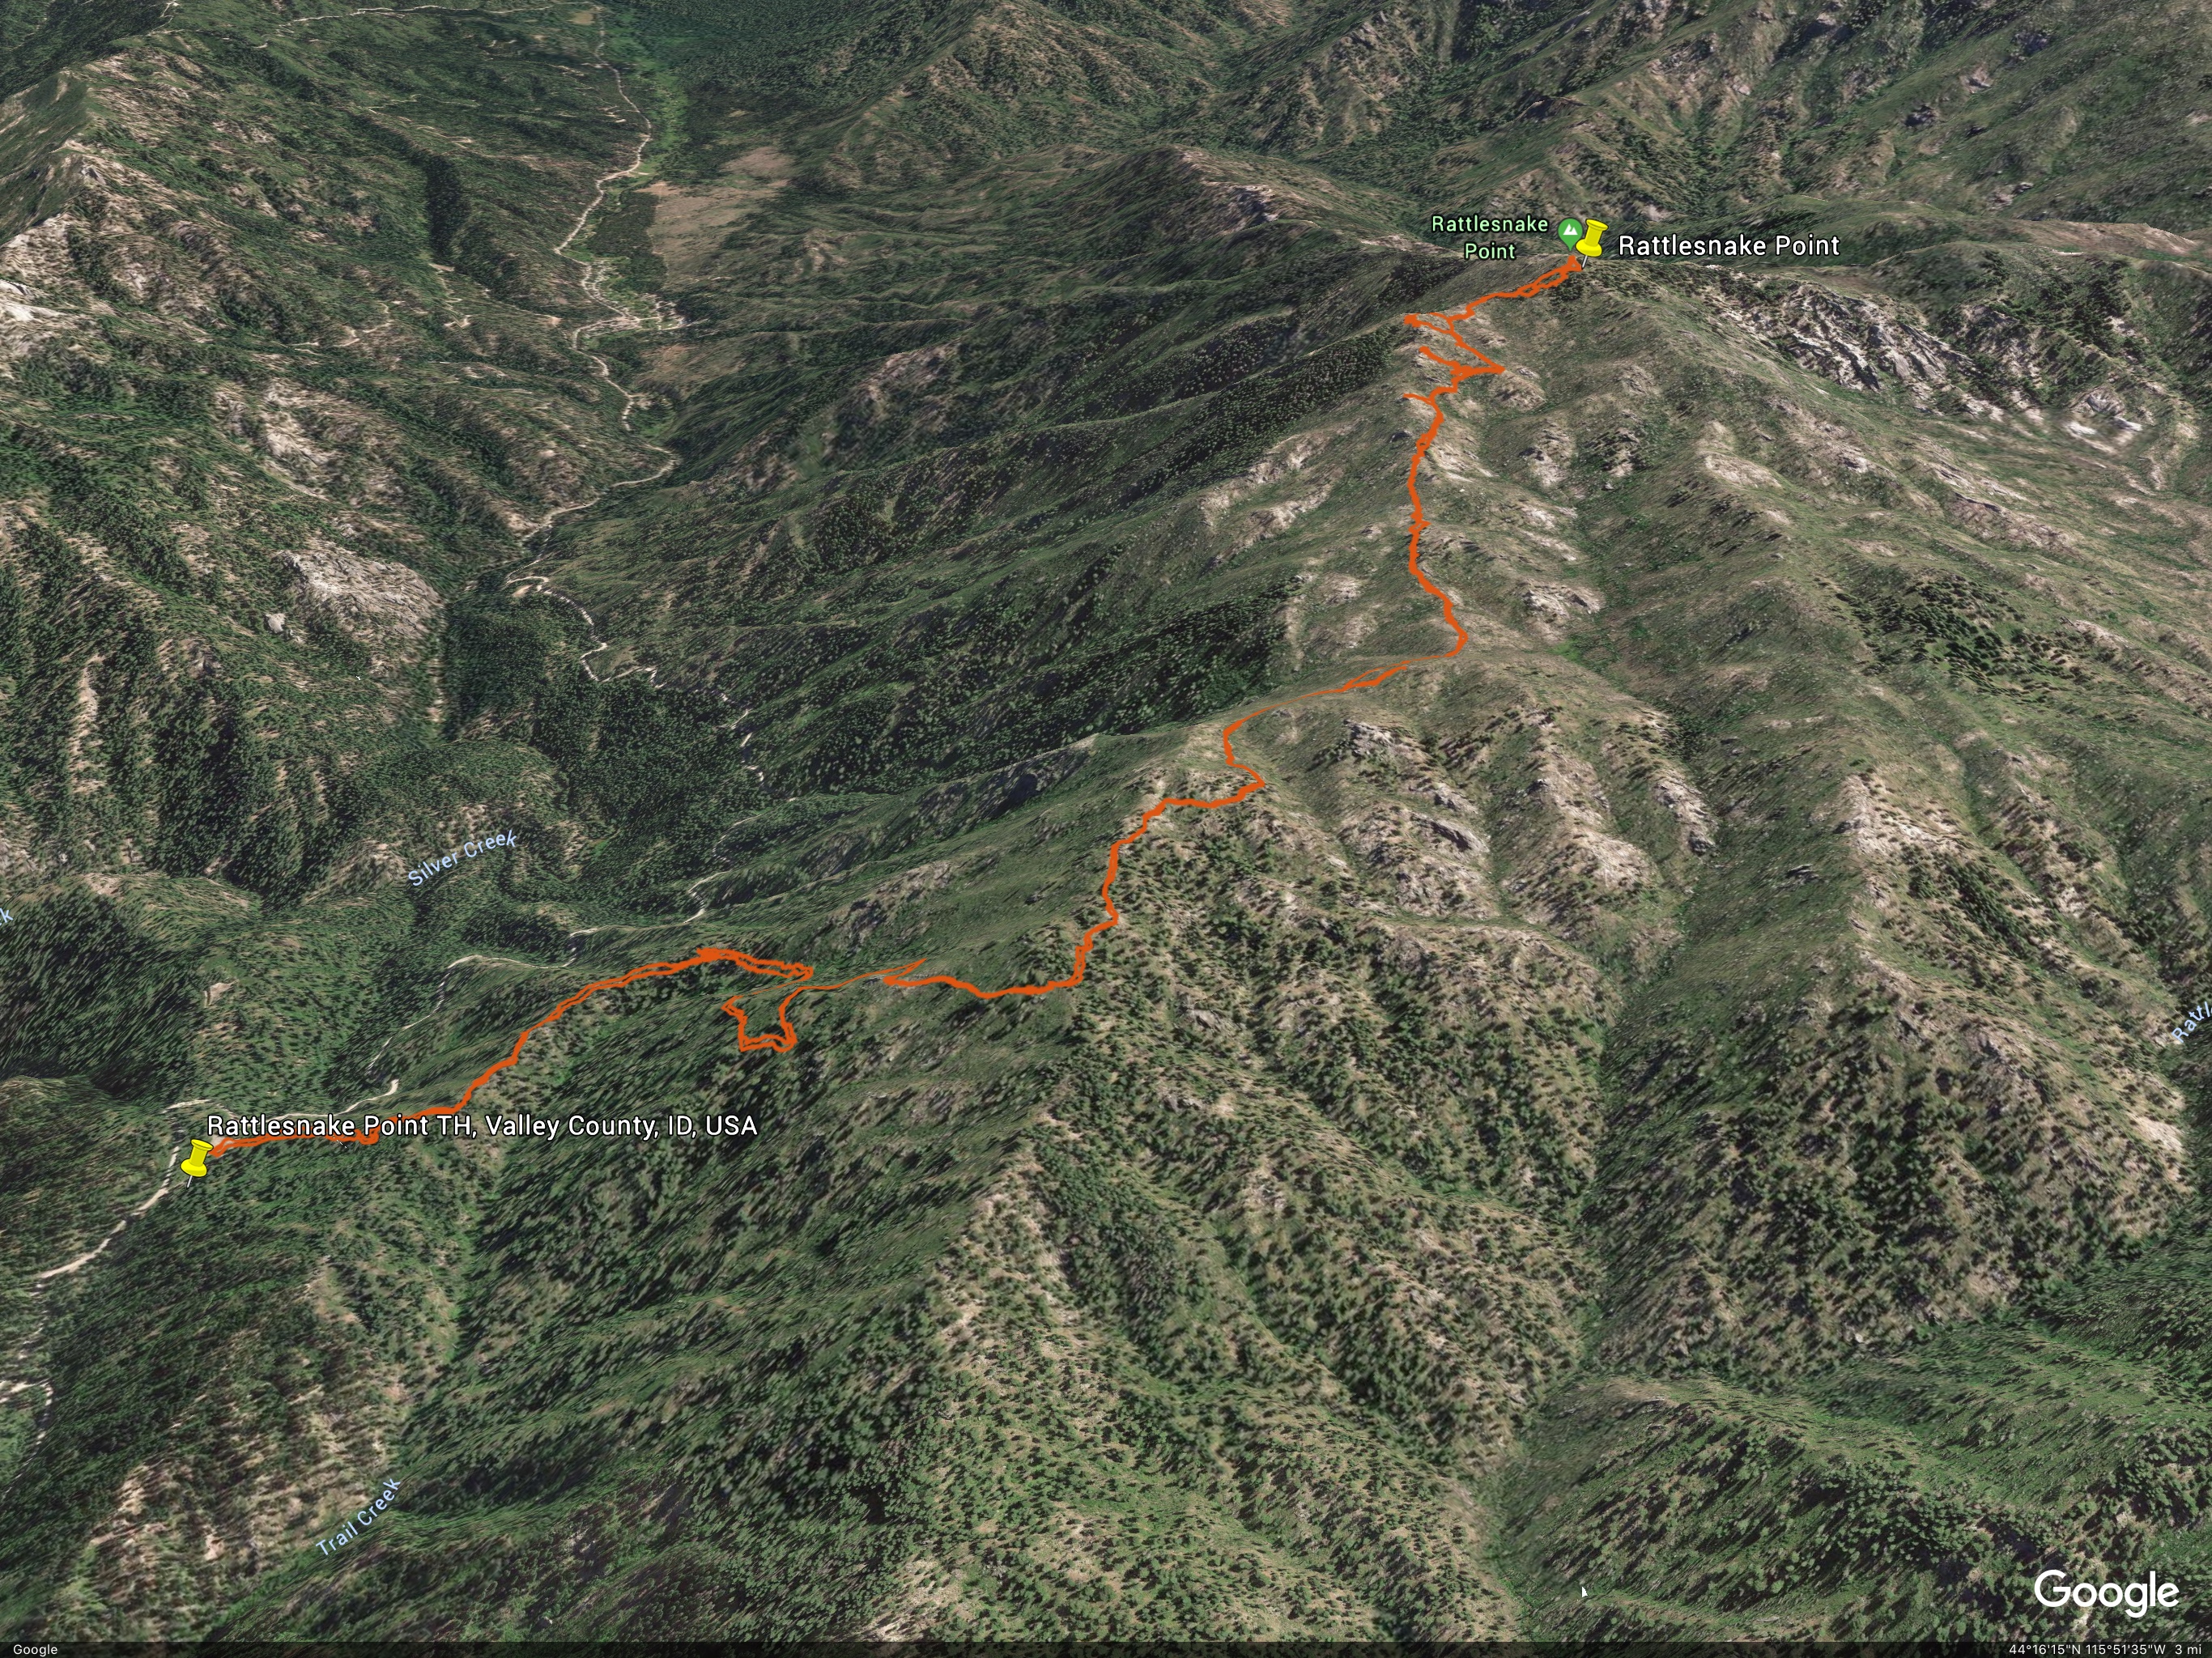 Rattlesnake Point with Brett Sergenian’s GPS track. Courtesy of Google Maps